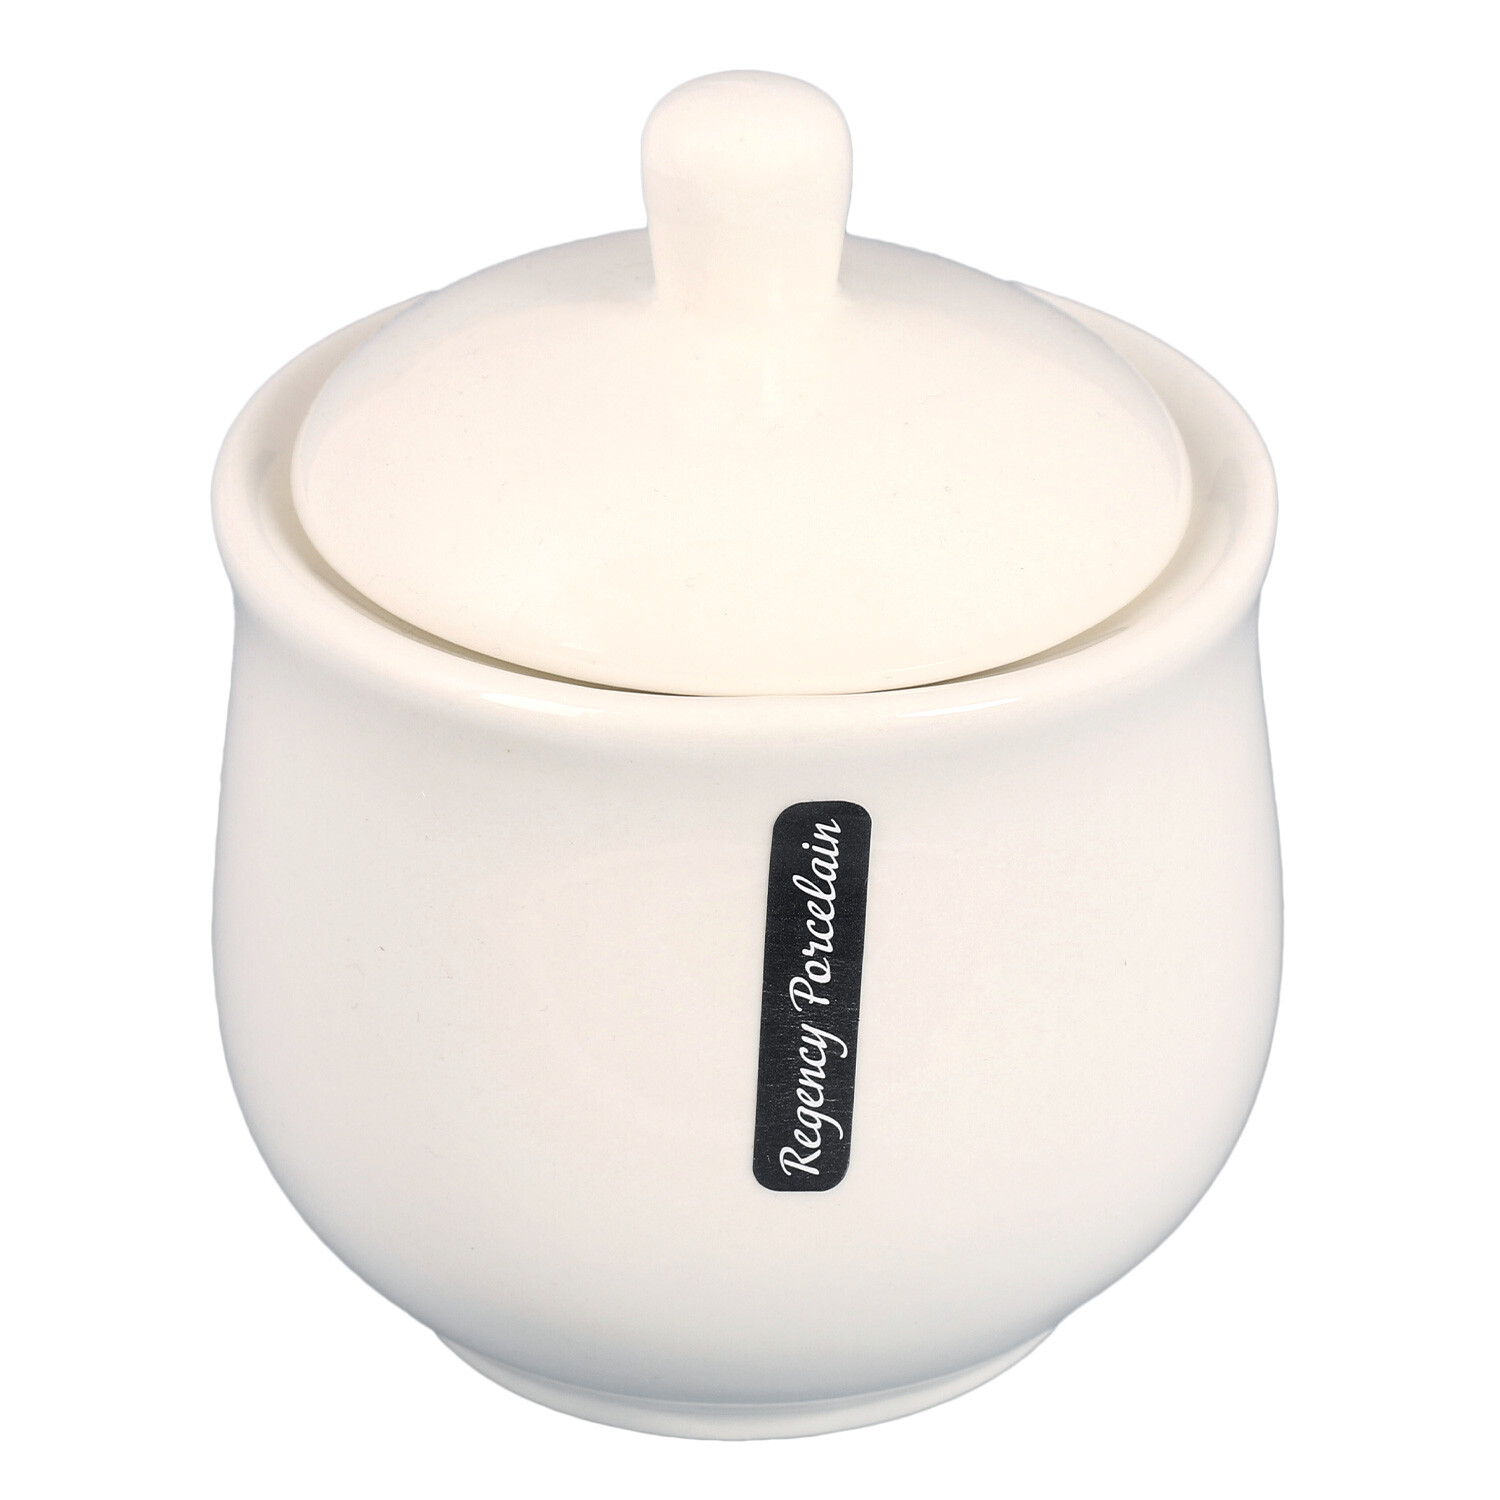 Regency Porcelain Sugar Bowl - White Image 1